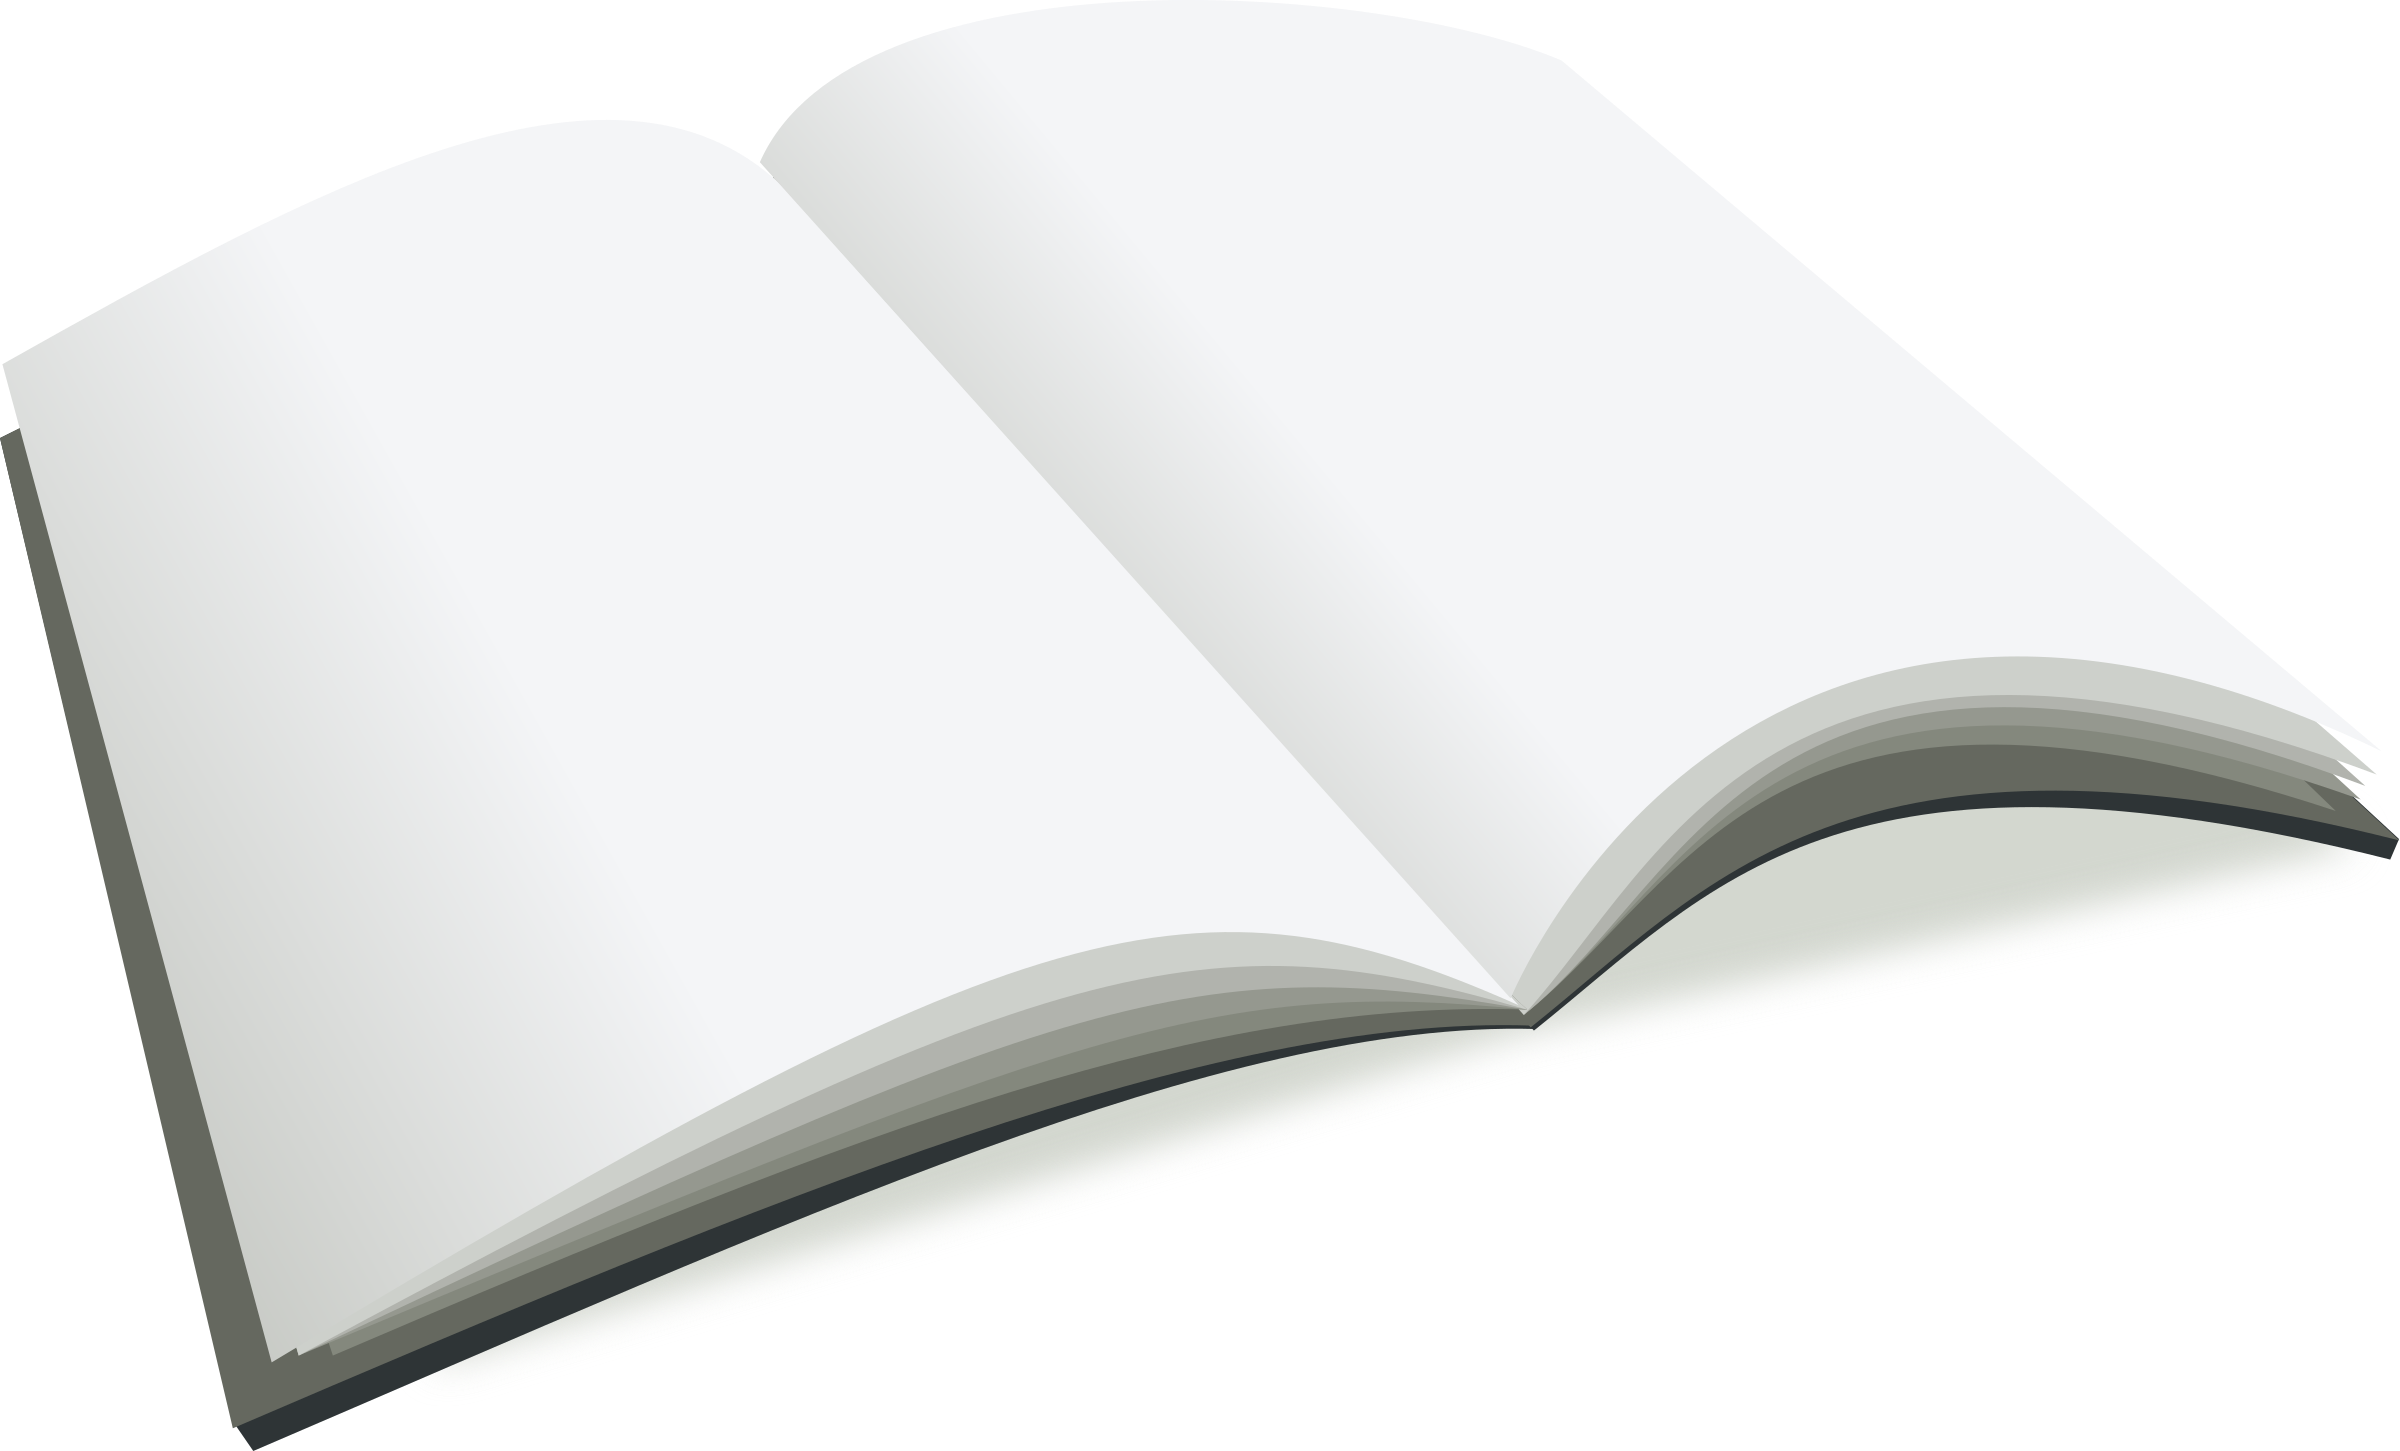 Clipart - open blank book